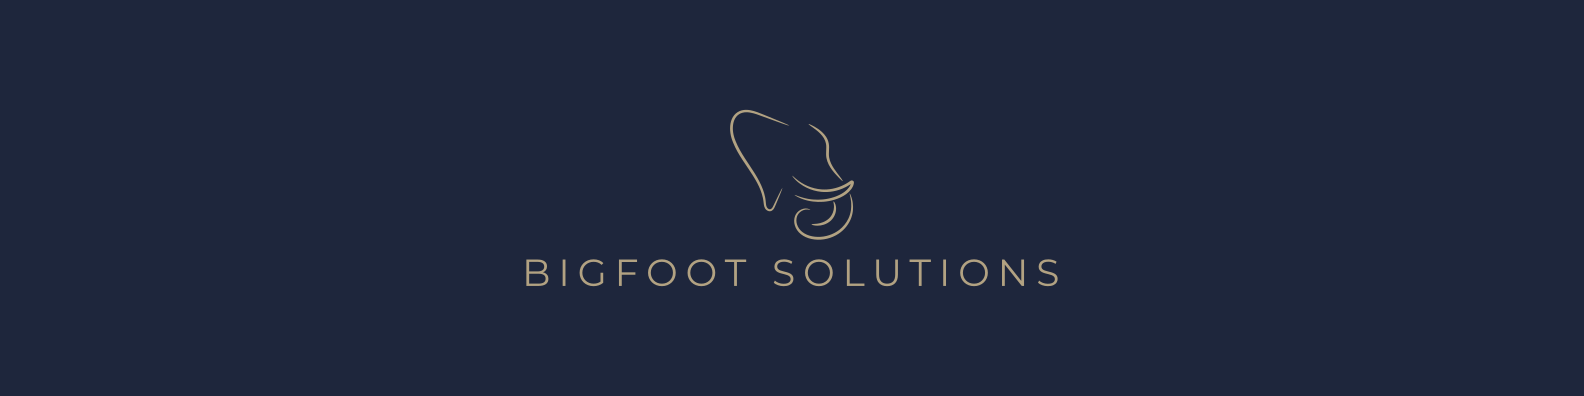 Bigfoot Solutions